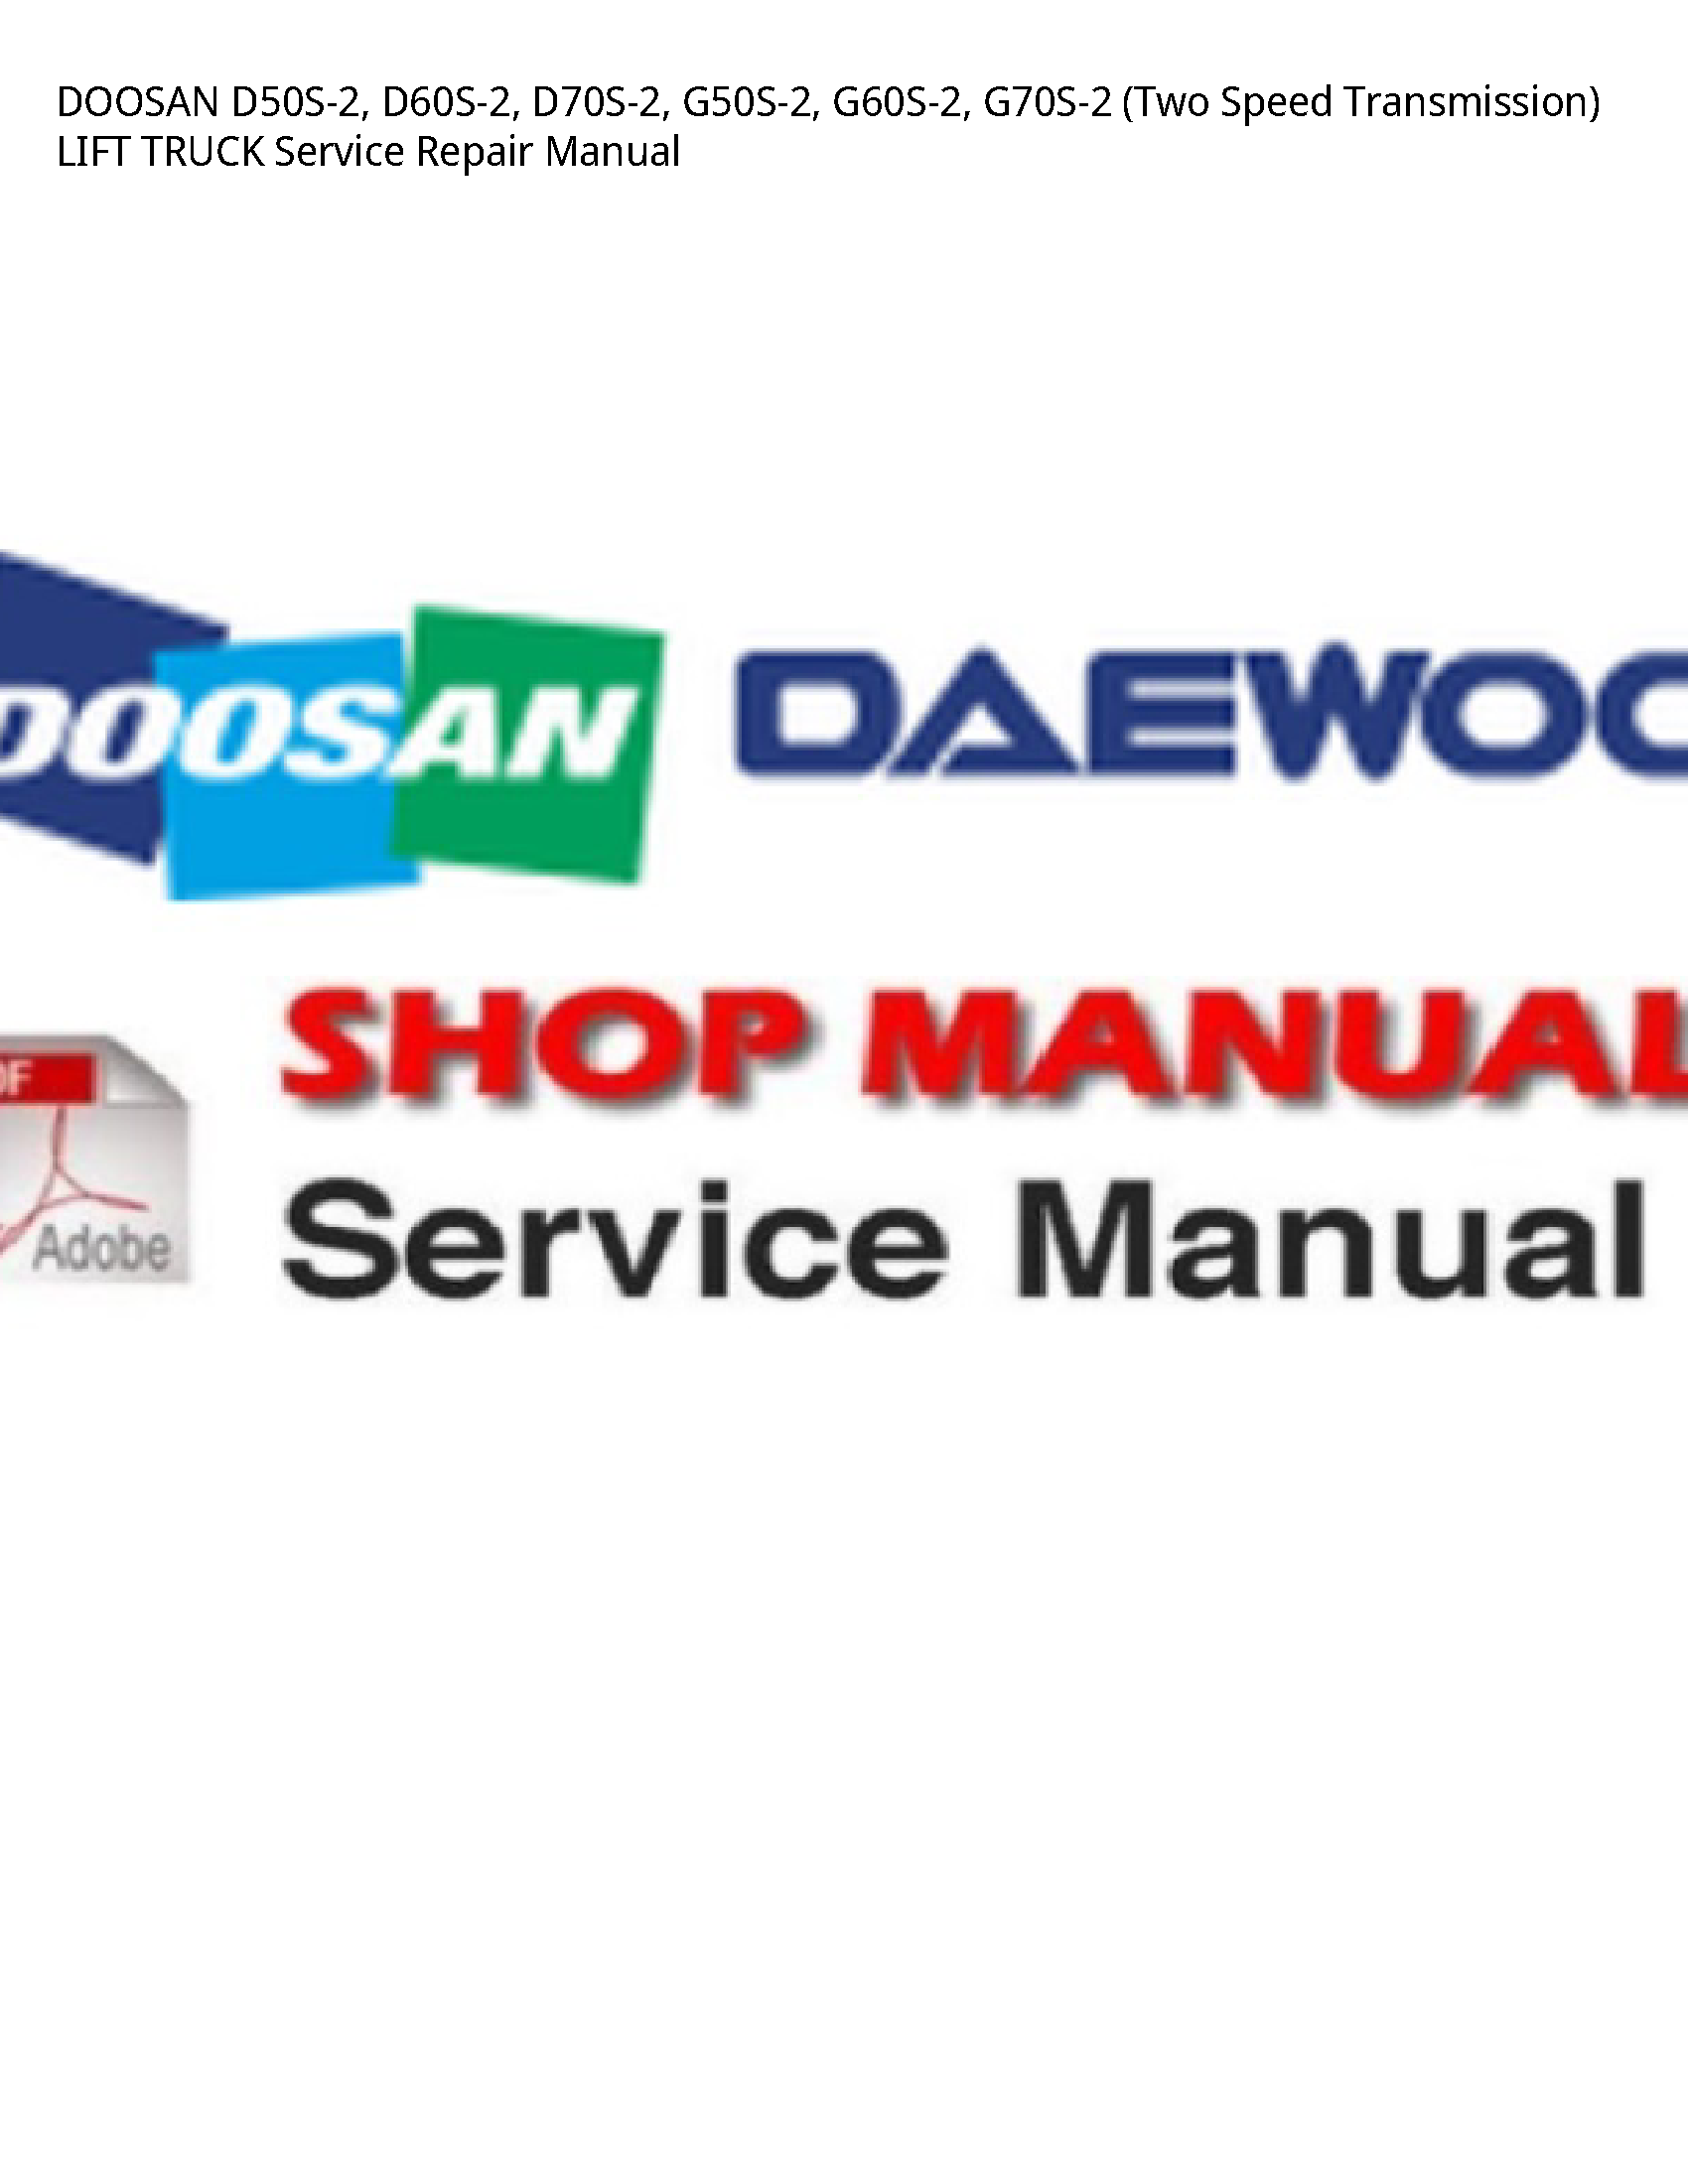 Doosan D50S-2 (Two Speed Transmission) LIFT TRUCK manual